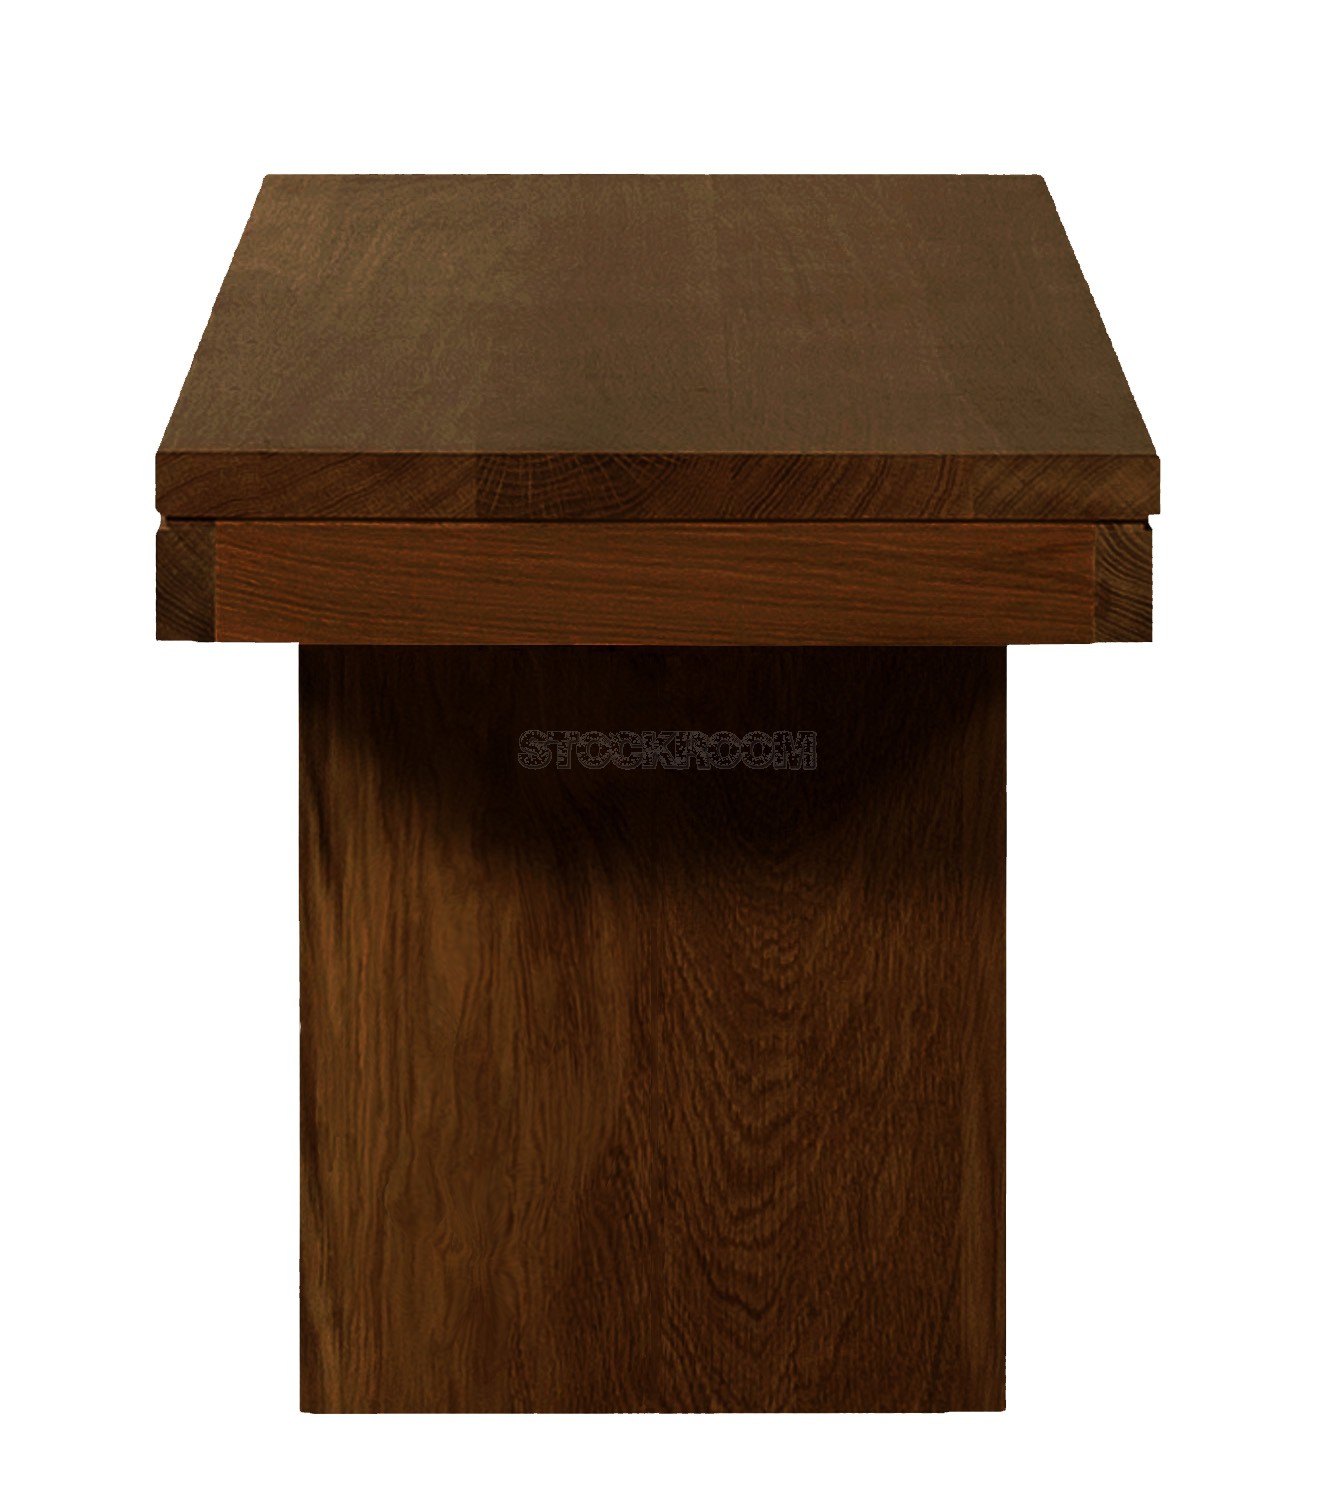 Carroll Solid Oak Wood Dining Table